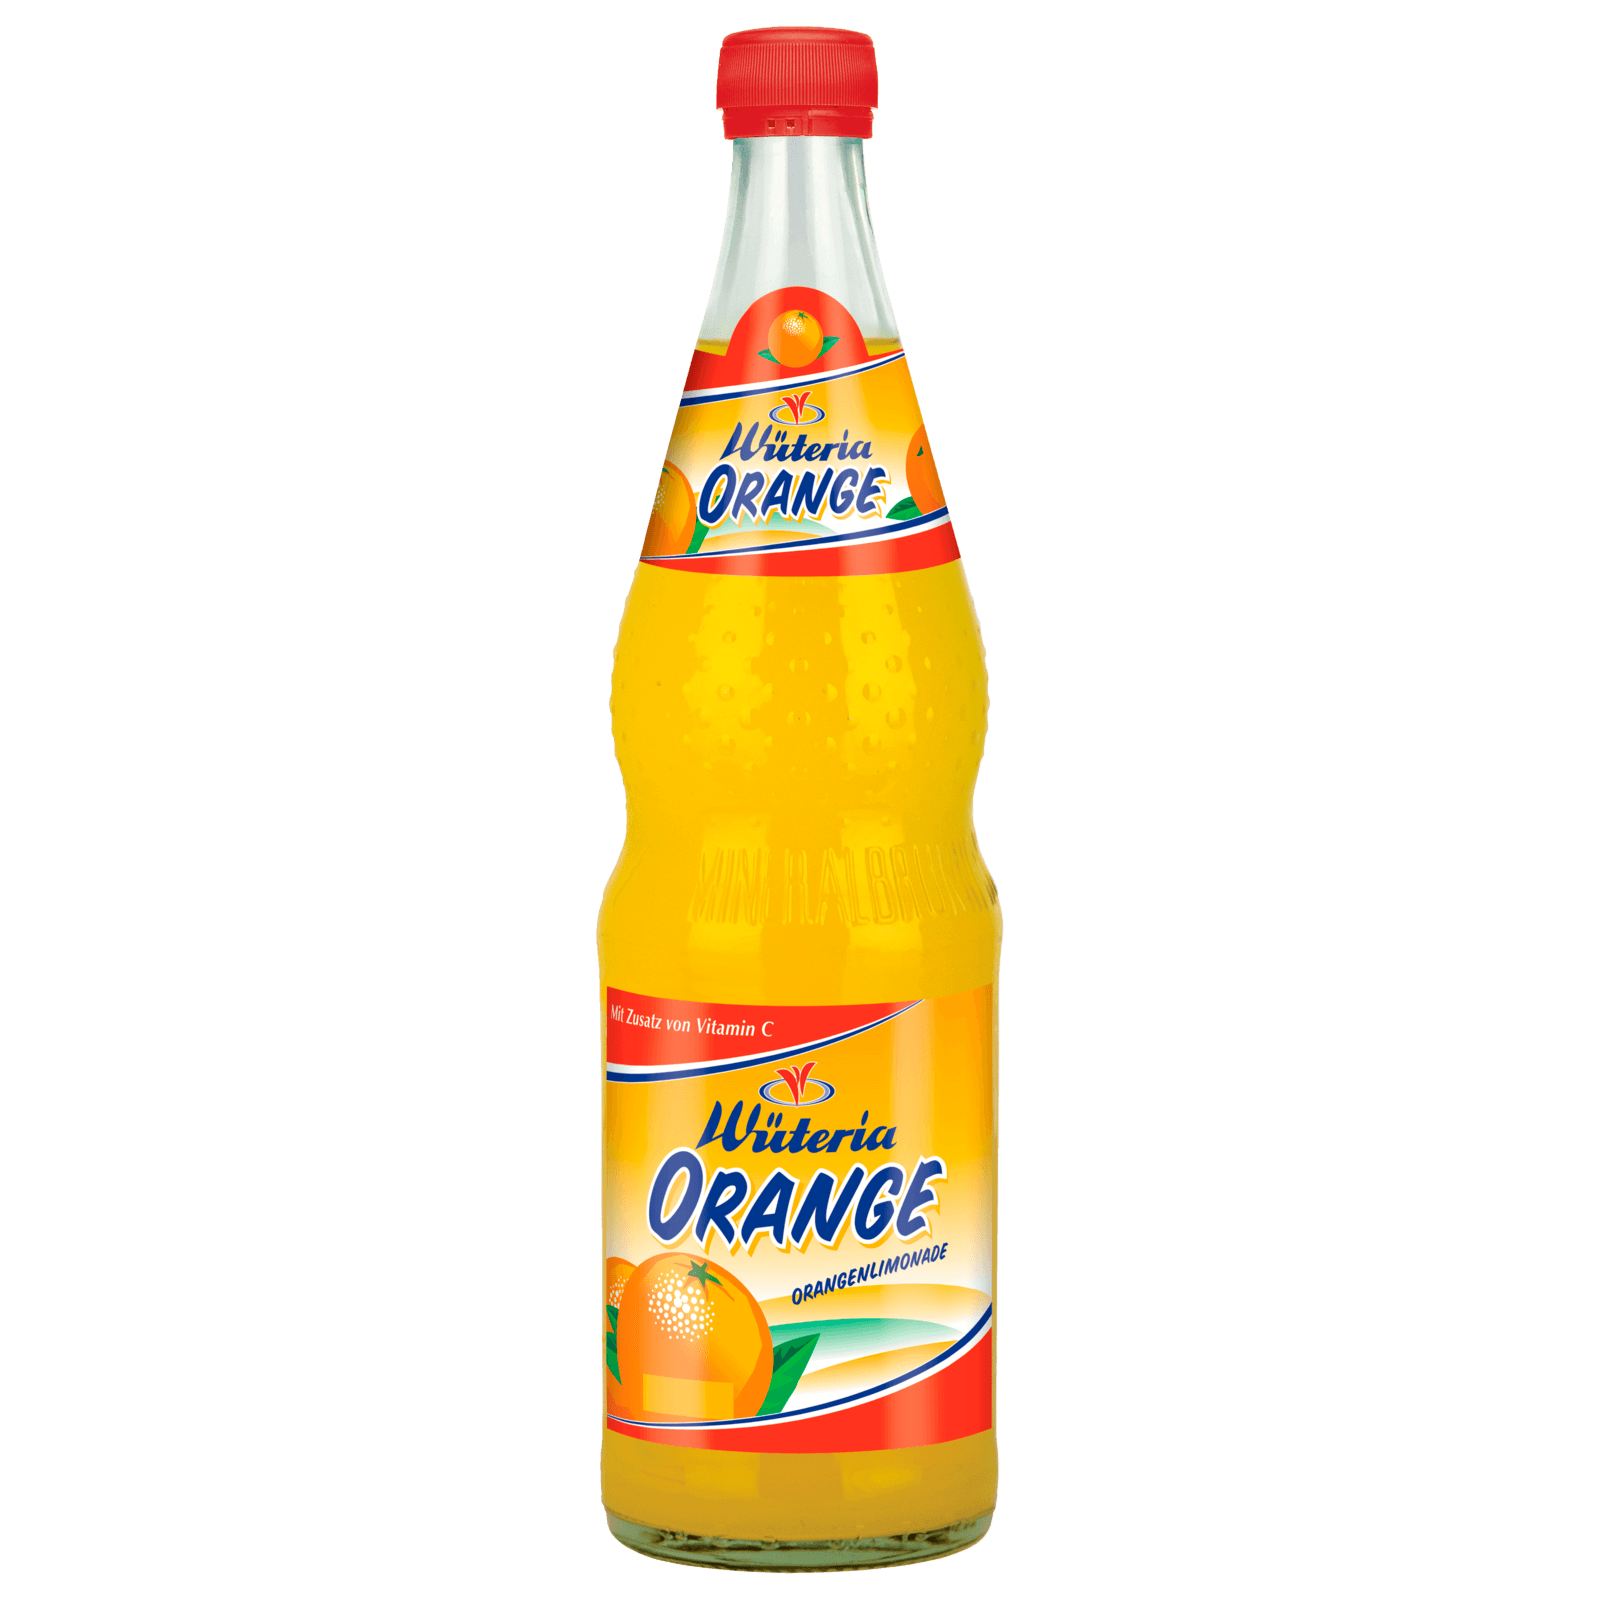 Wüteria Orange Orangenlimonade 0,7l bei REWE online bestellen!